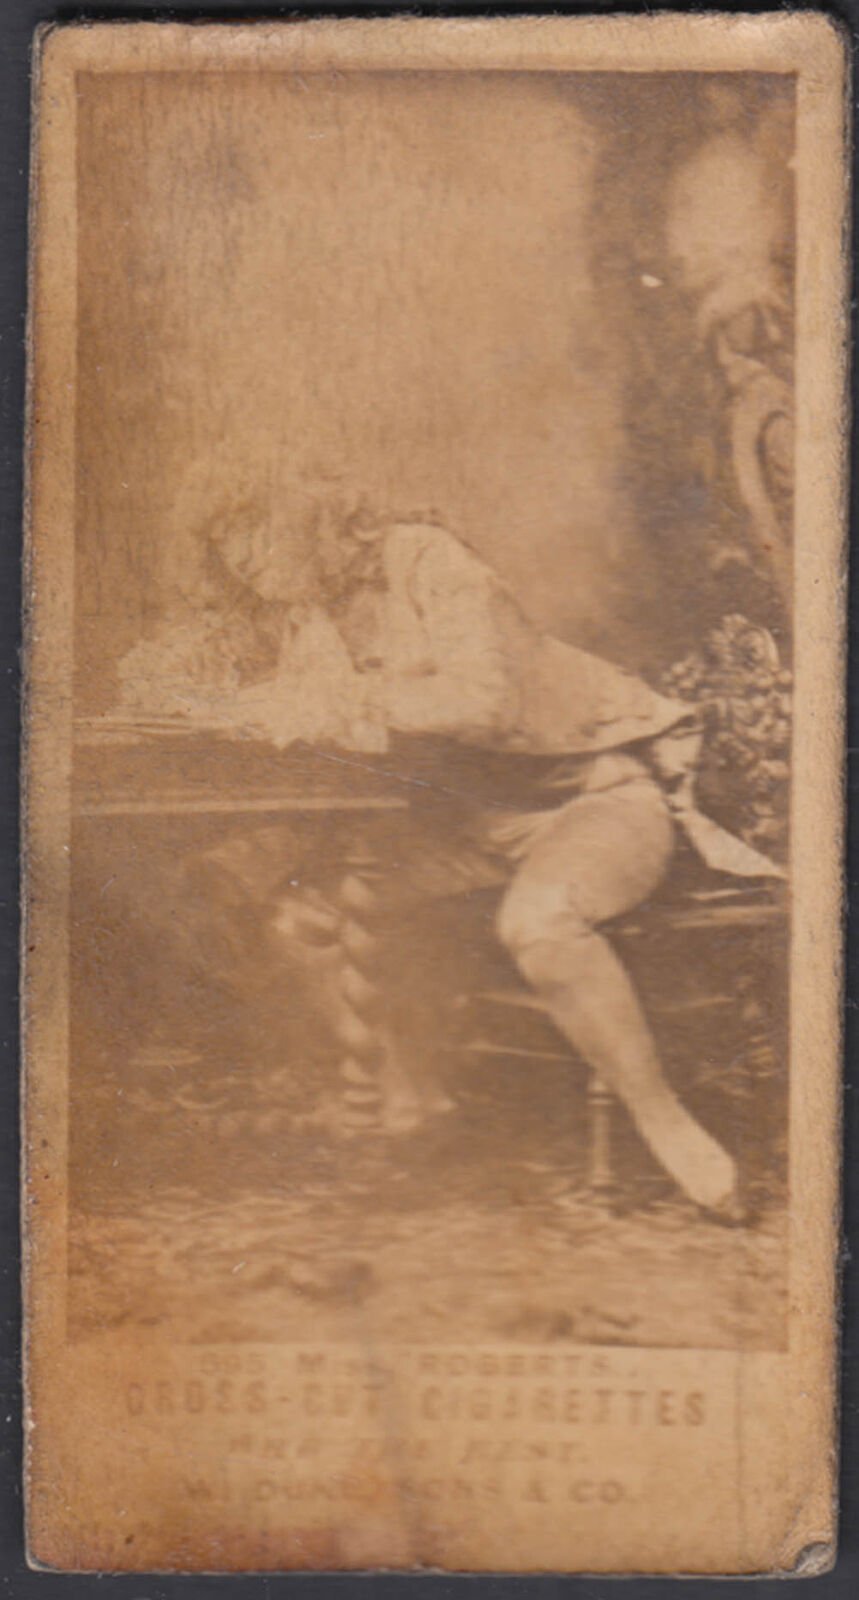 Actress Miss Roberts Cross-Cut Cigarettes tobacco card photo c 1890s